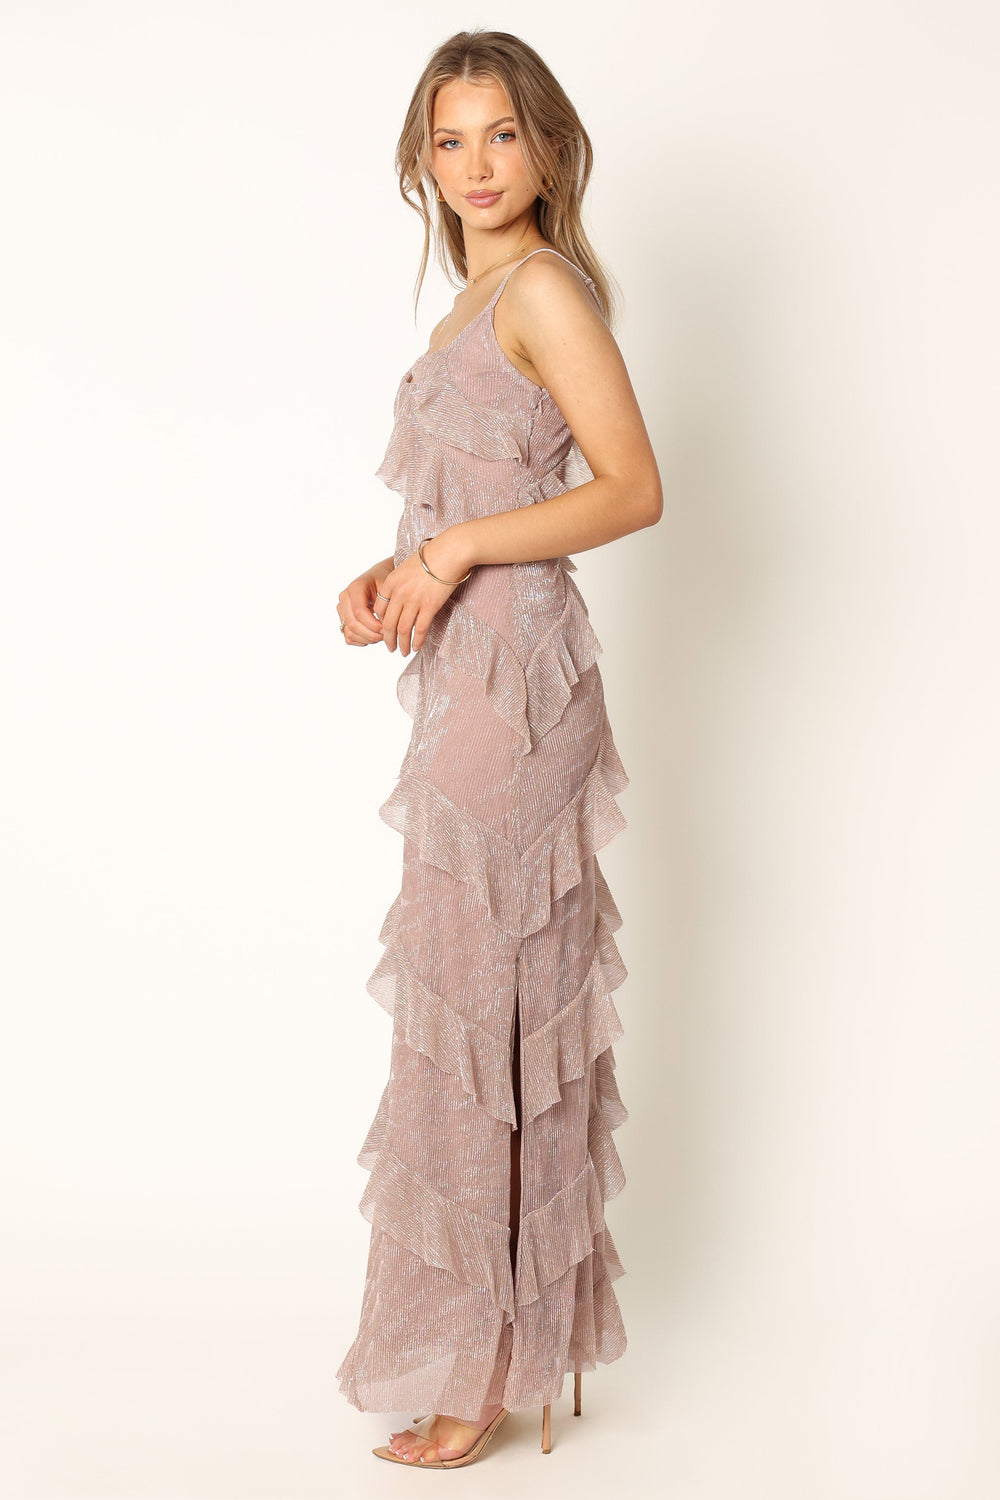 Petal and Pup USA DRESSES Ciao Ruffles Maxi Dress - Dusty Lavender